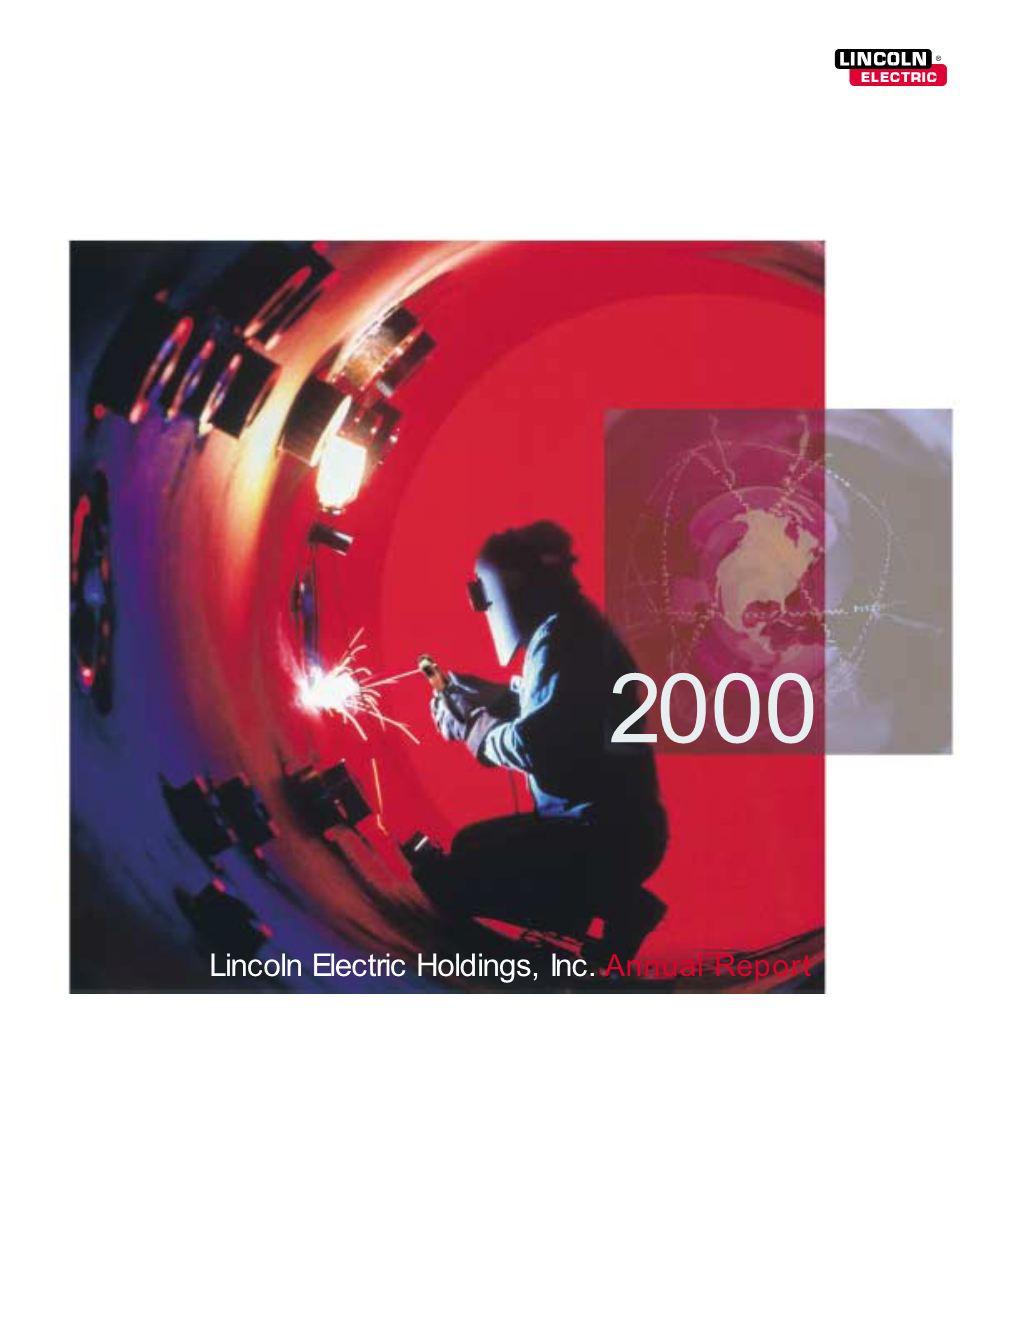 2000 Annual Report | Lincoln Electric